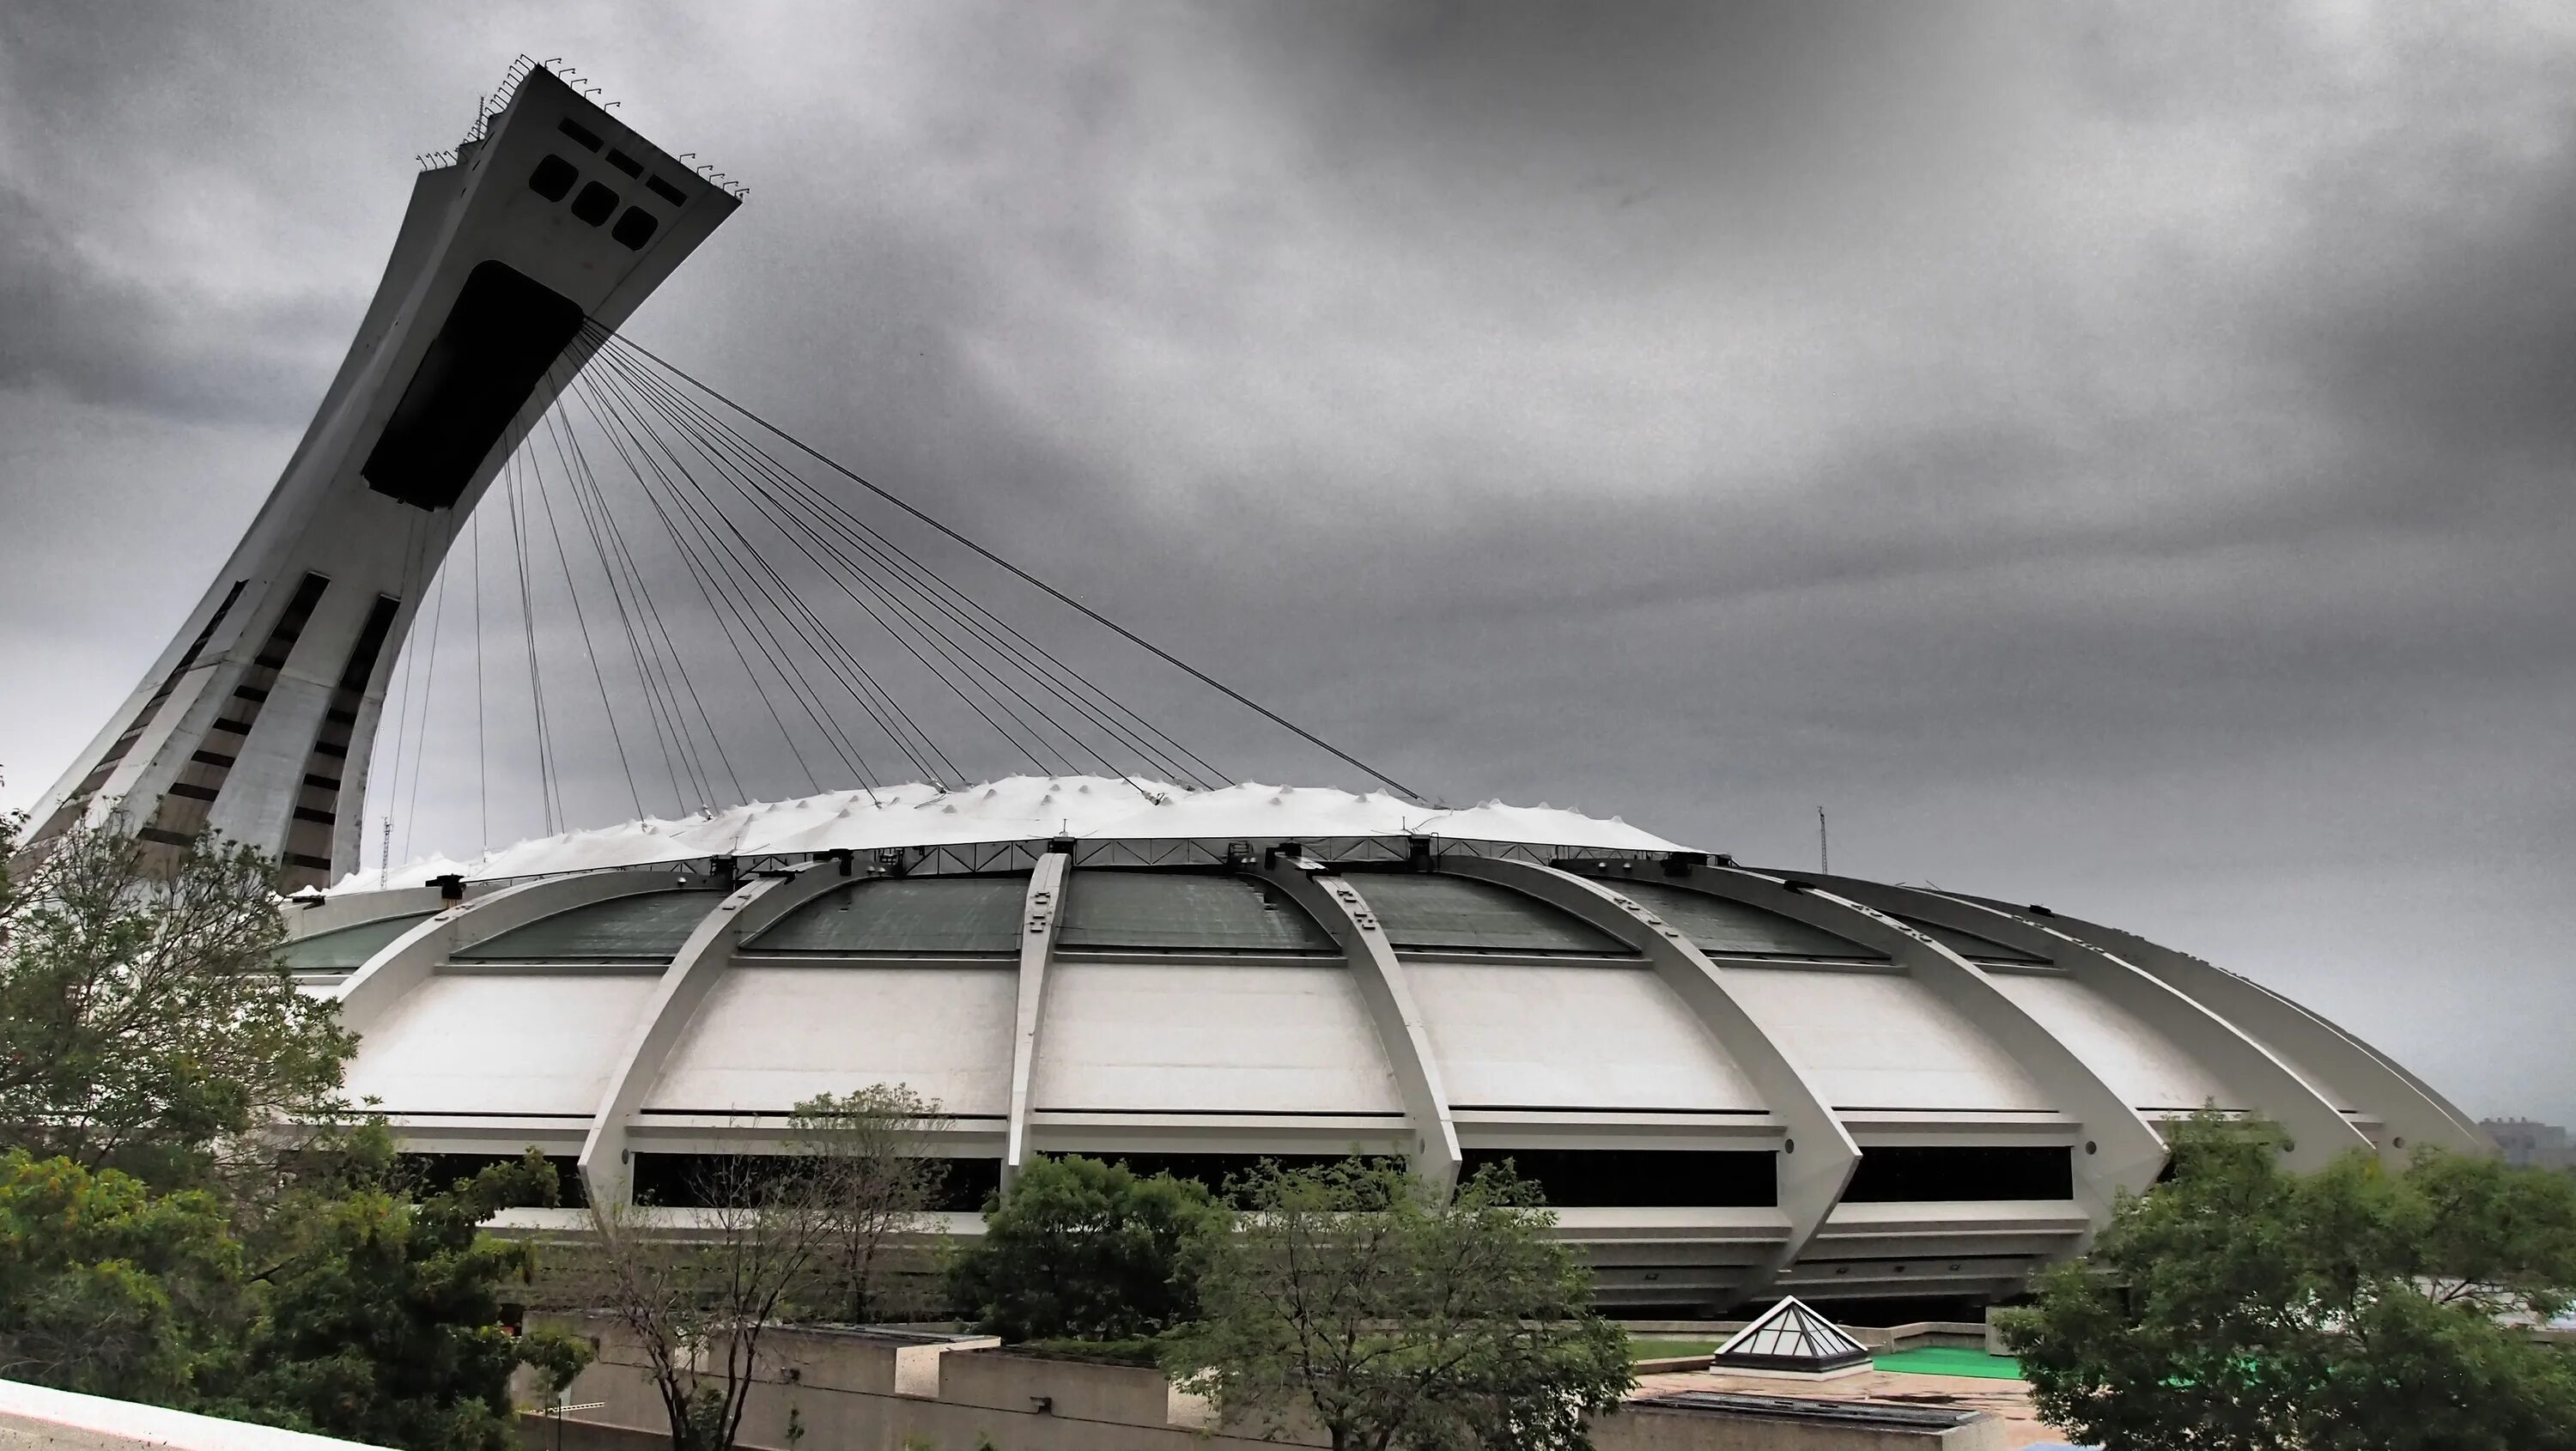 Олимпийский стадион в Монреале. Олимпийский стадион в Монреале конструкции. Олимпийский парк Монреаль. Олимпийский стадион Монреаль 1976.